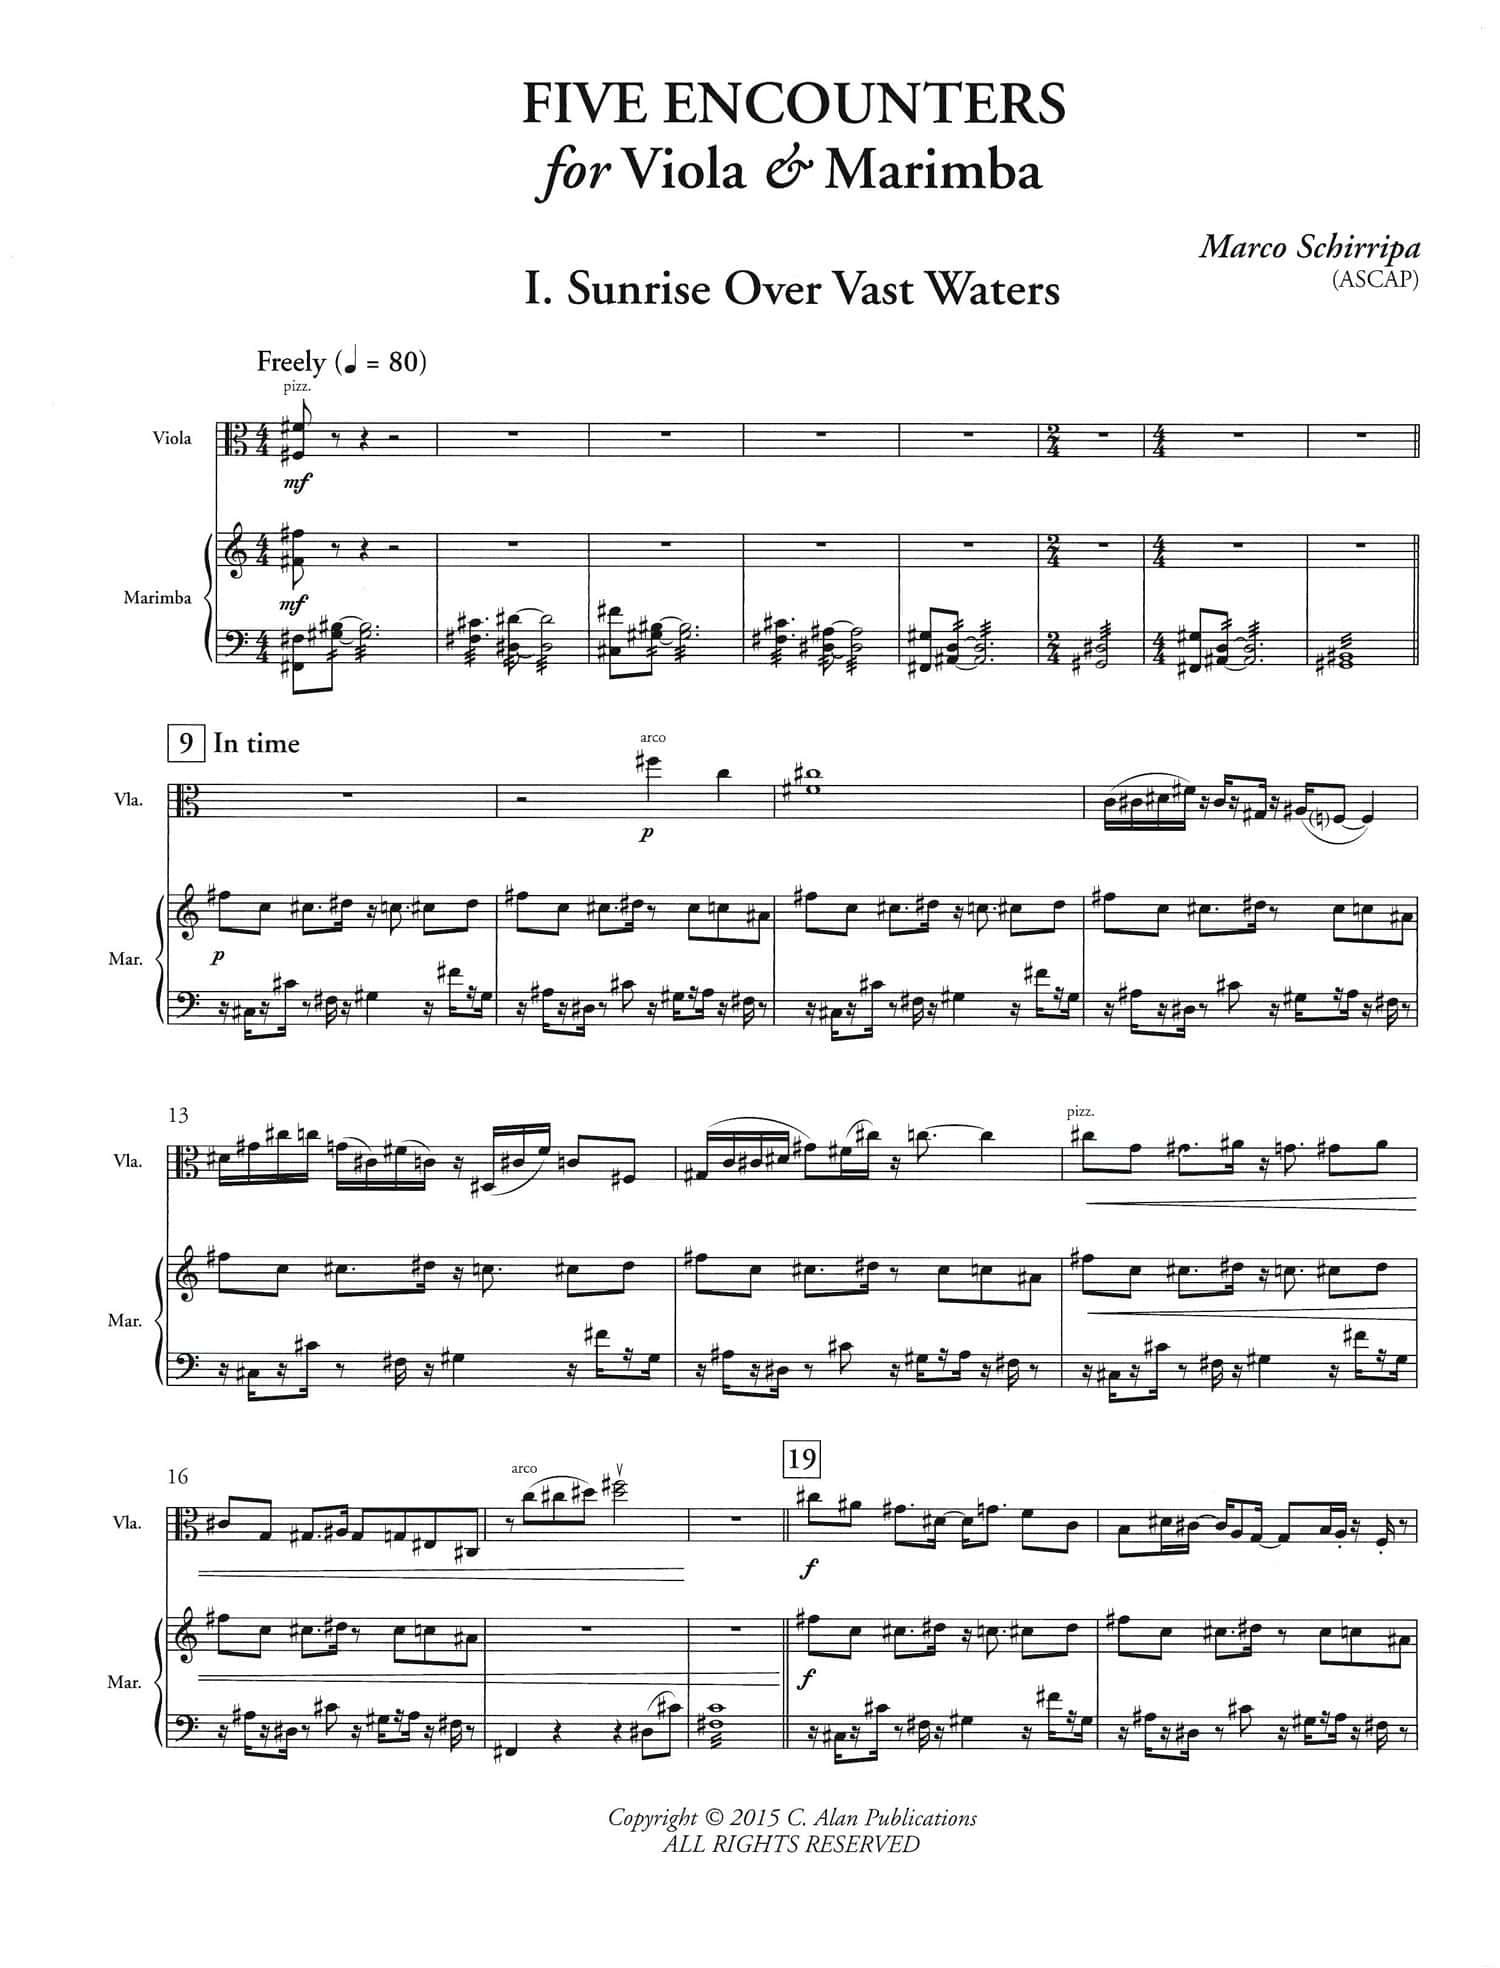 Five Encounters for Viola & Marimba by Marco Schirripa